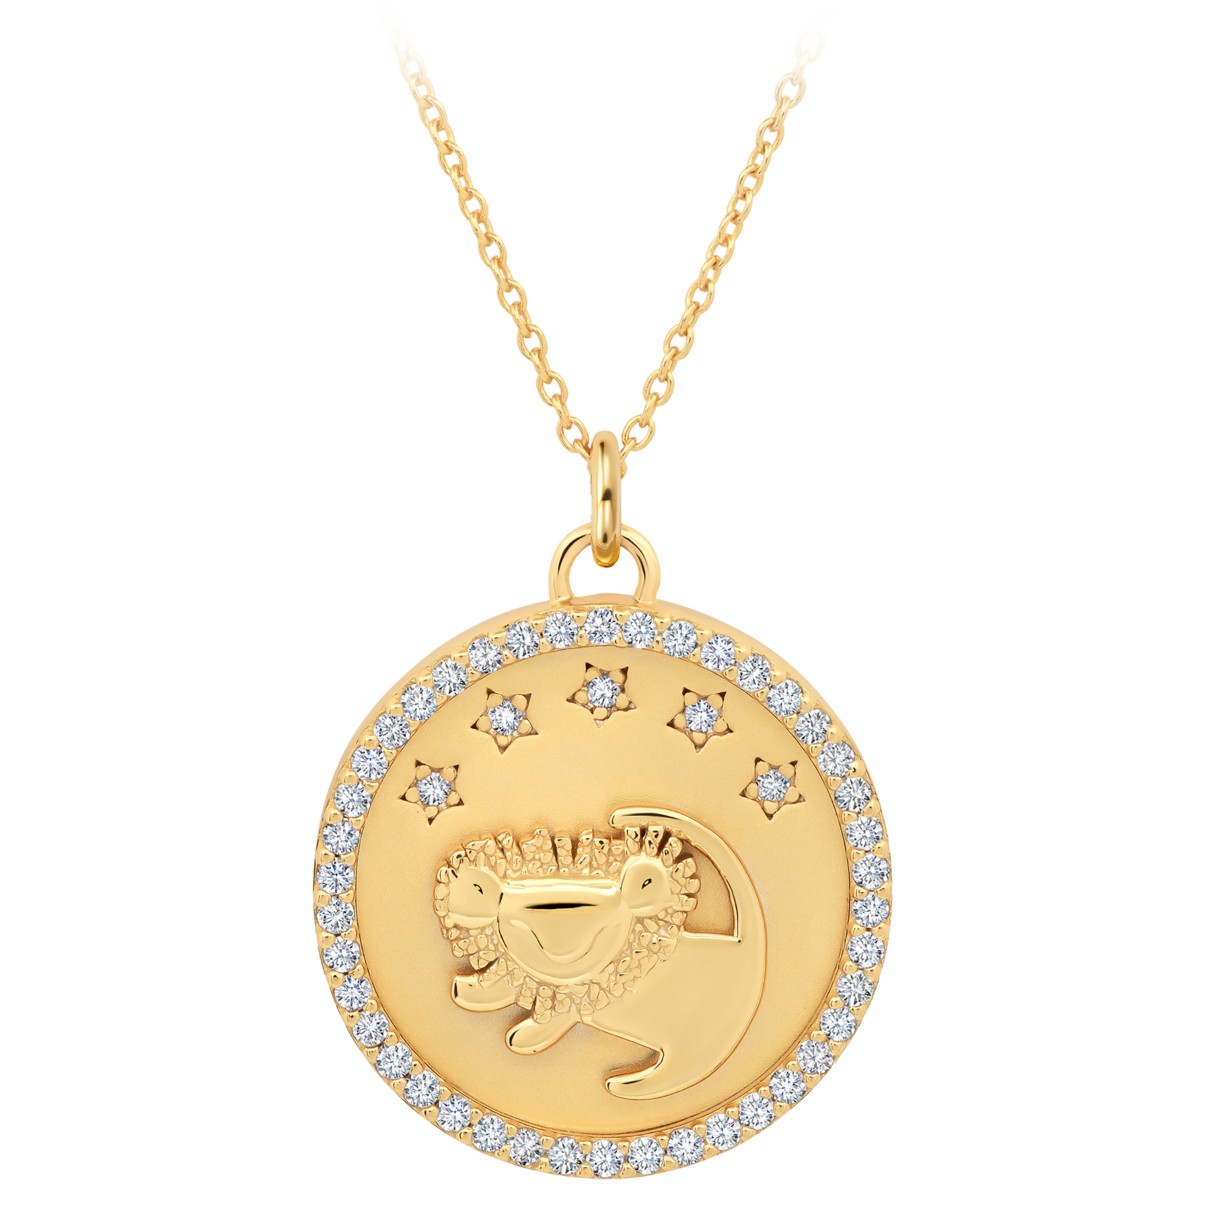 Simba Medallion Necklace by CRISLU – The Lion King